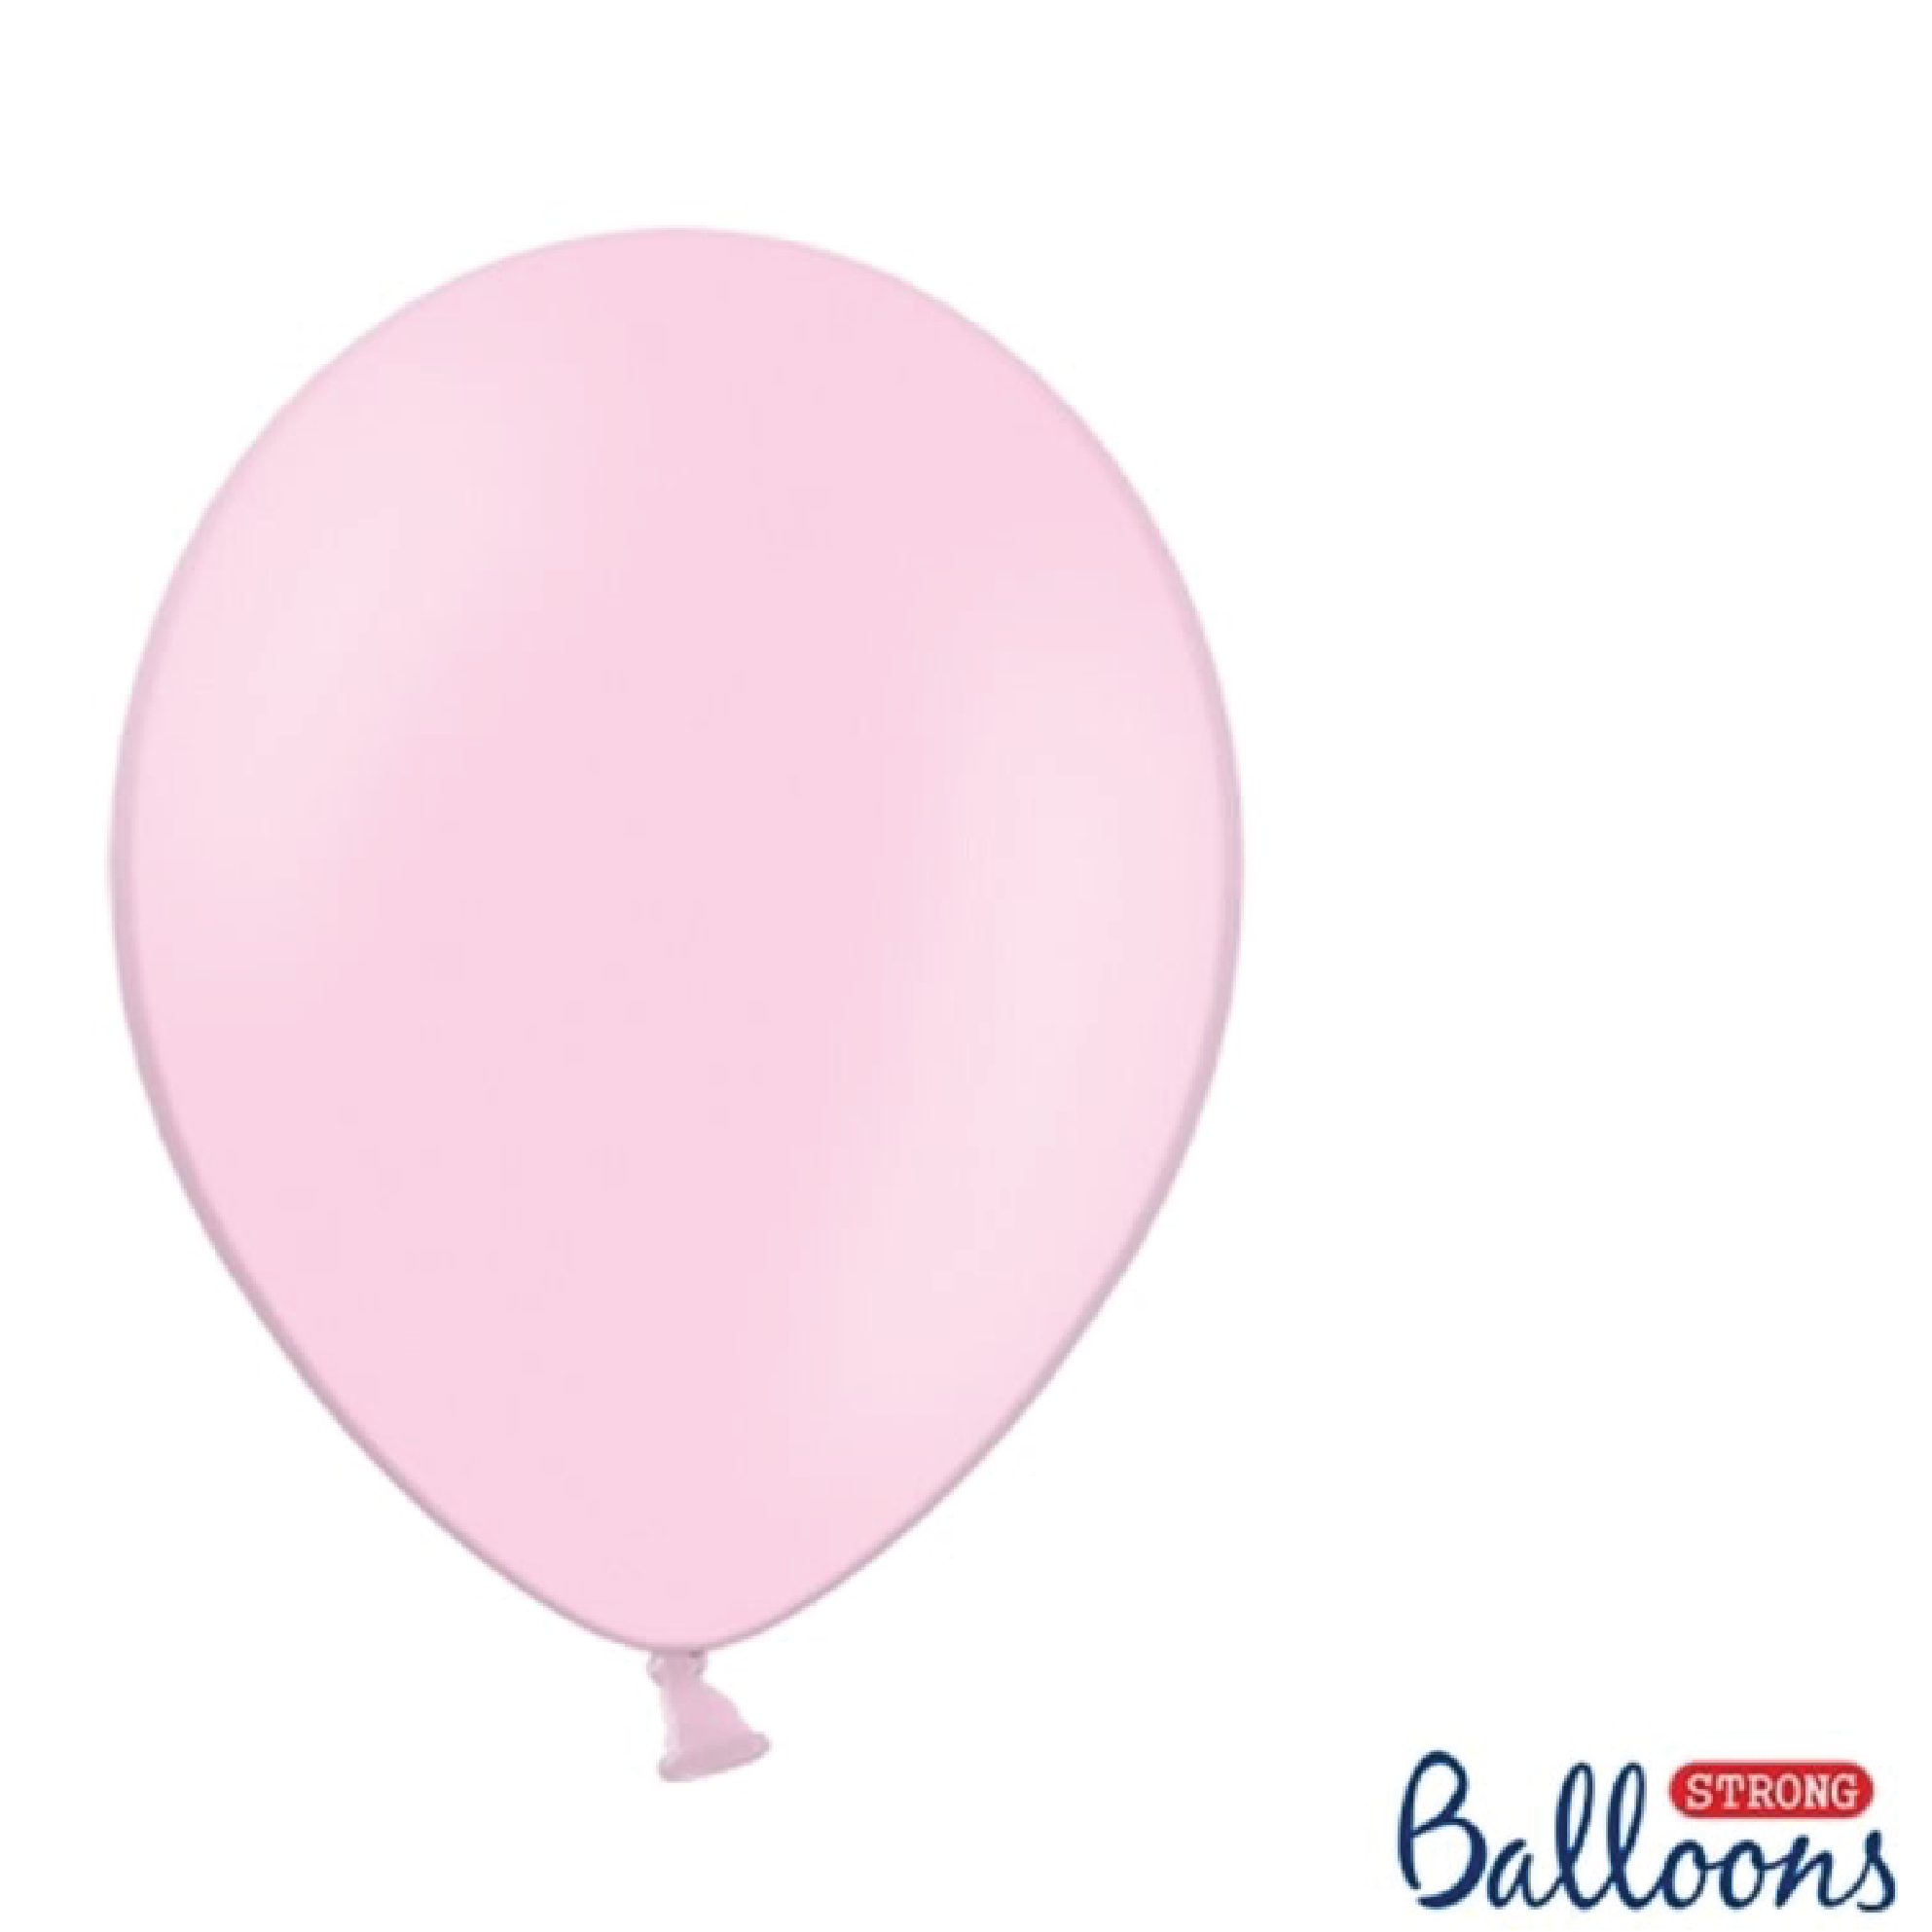 Latexballonger Pastel Baby Pink 30cm 10st Strong